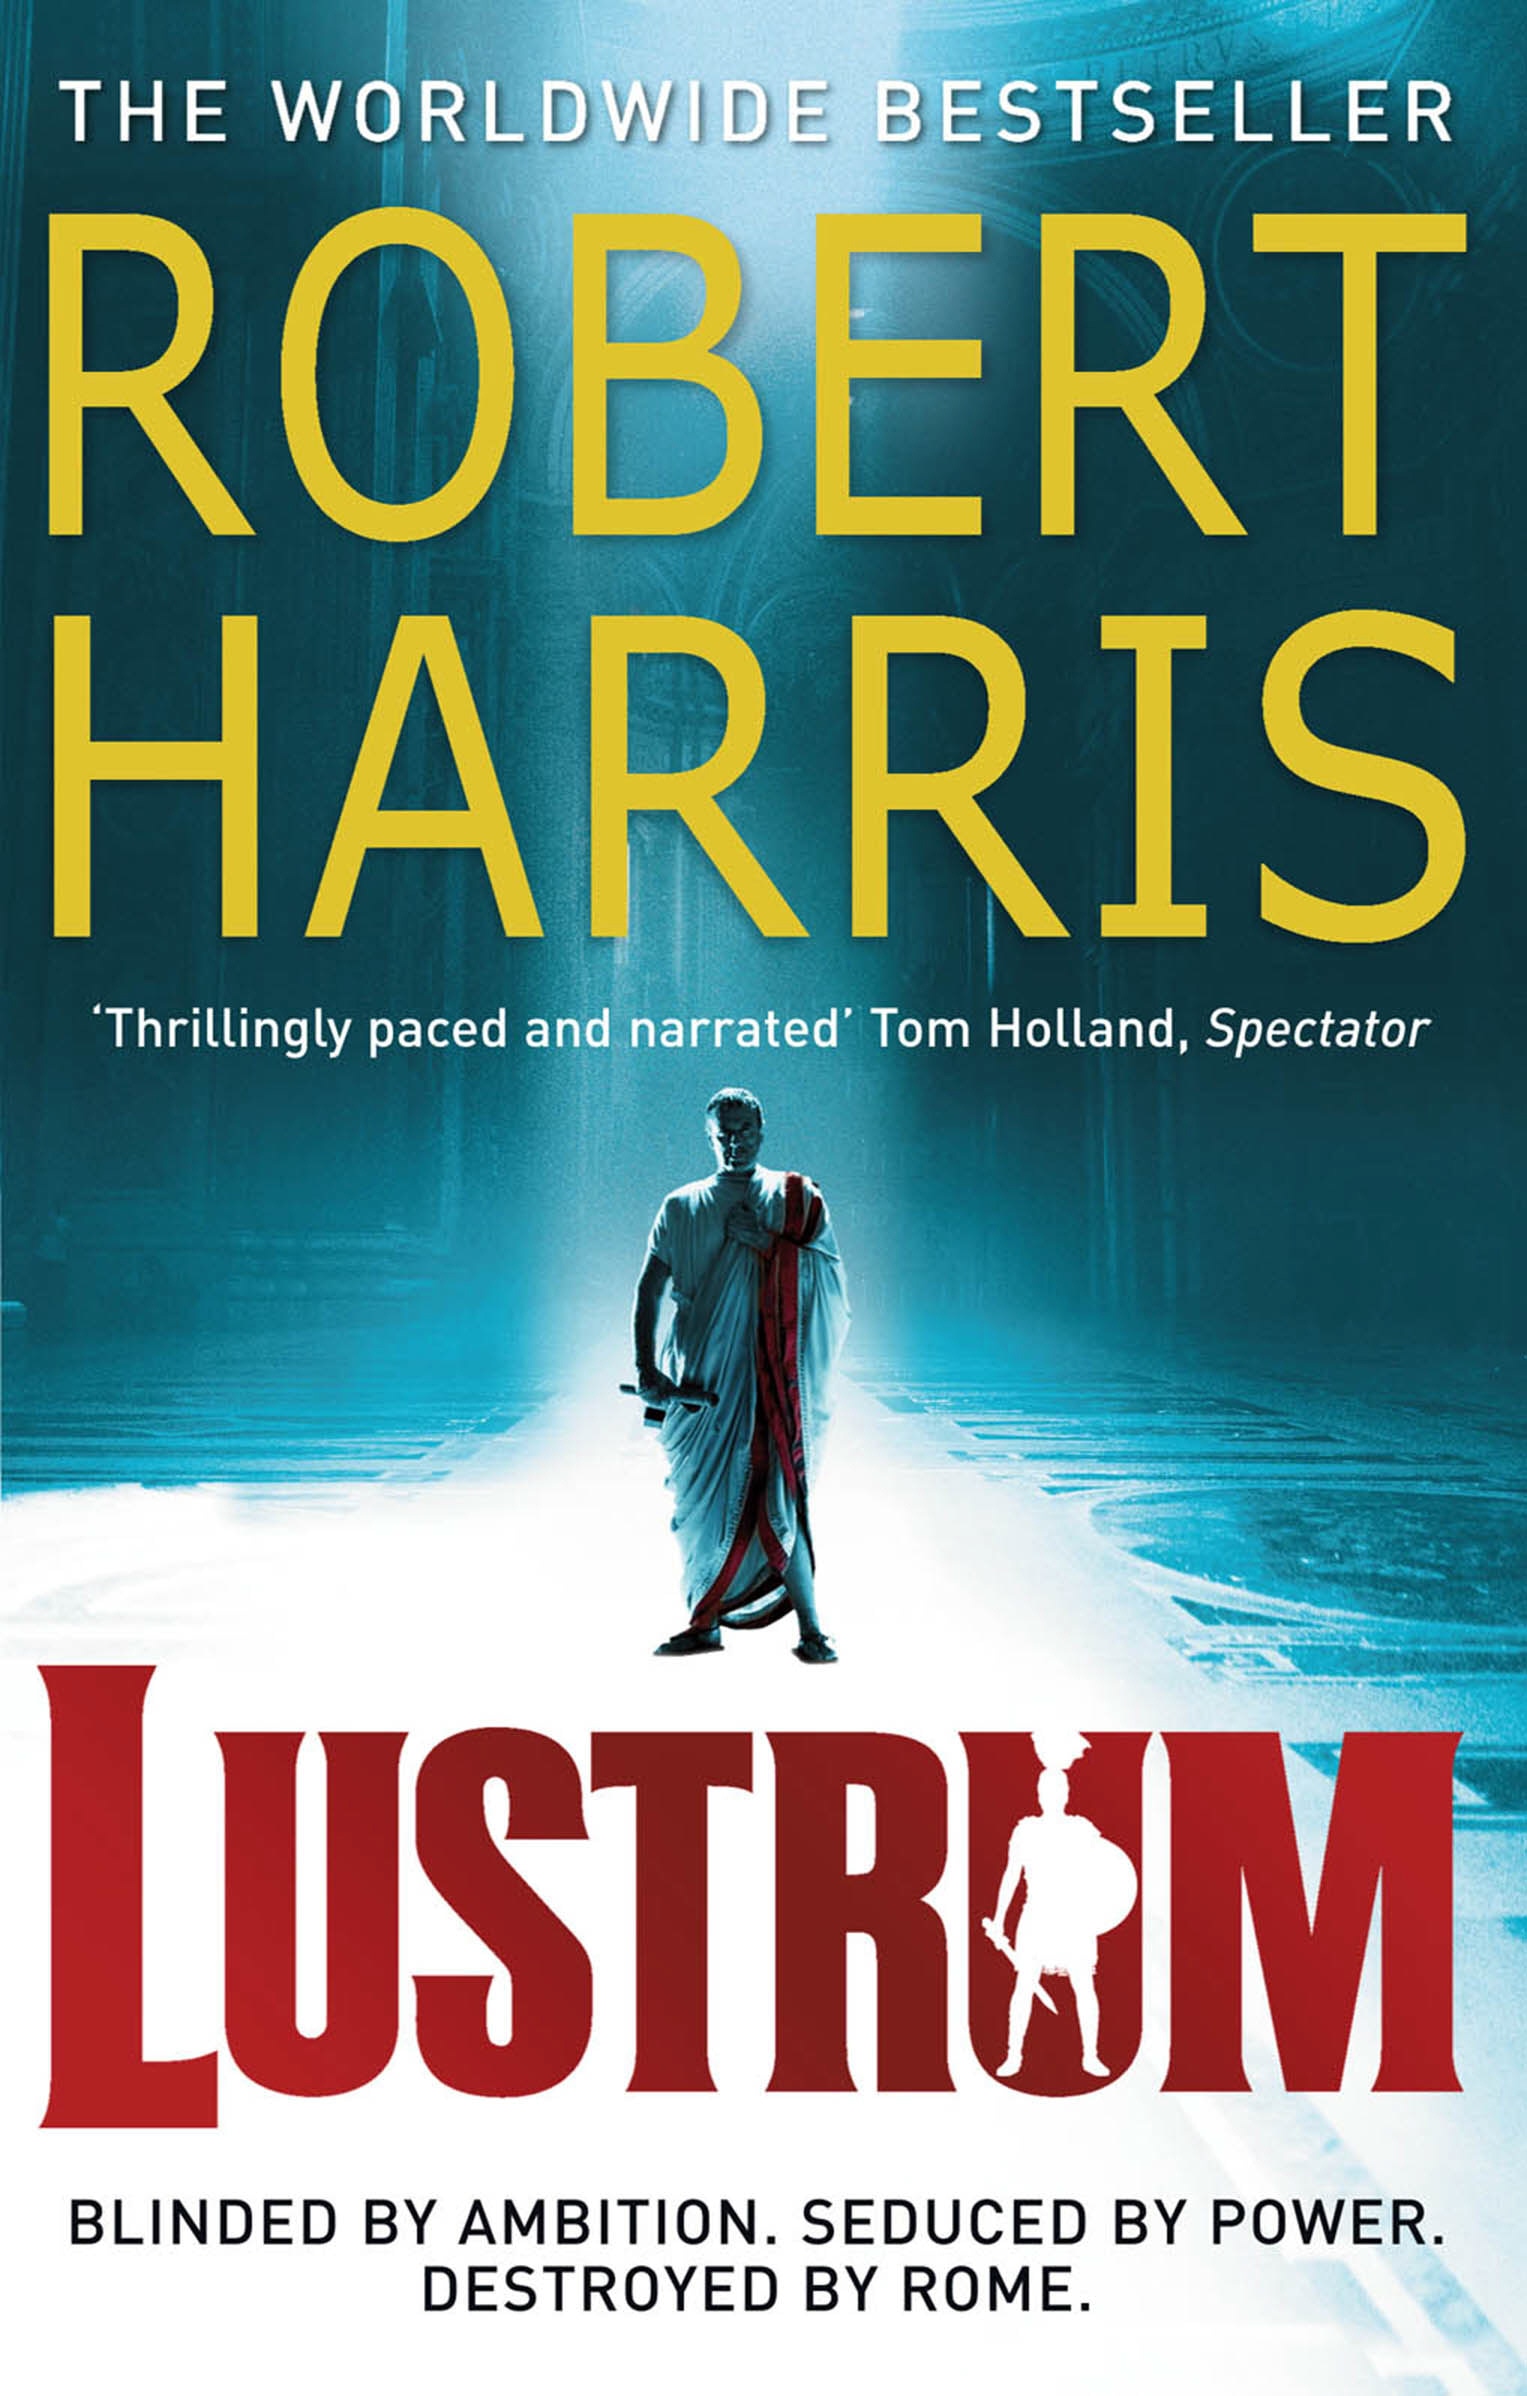 Book “Lustrum” by Robert Harris